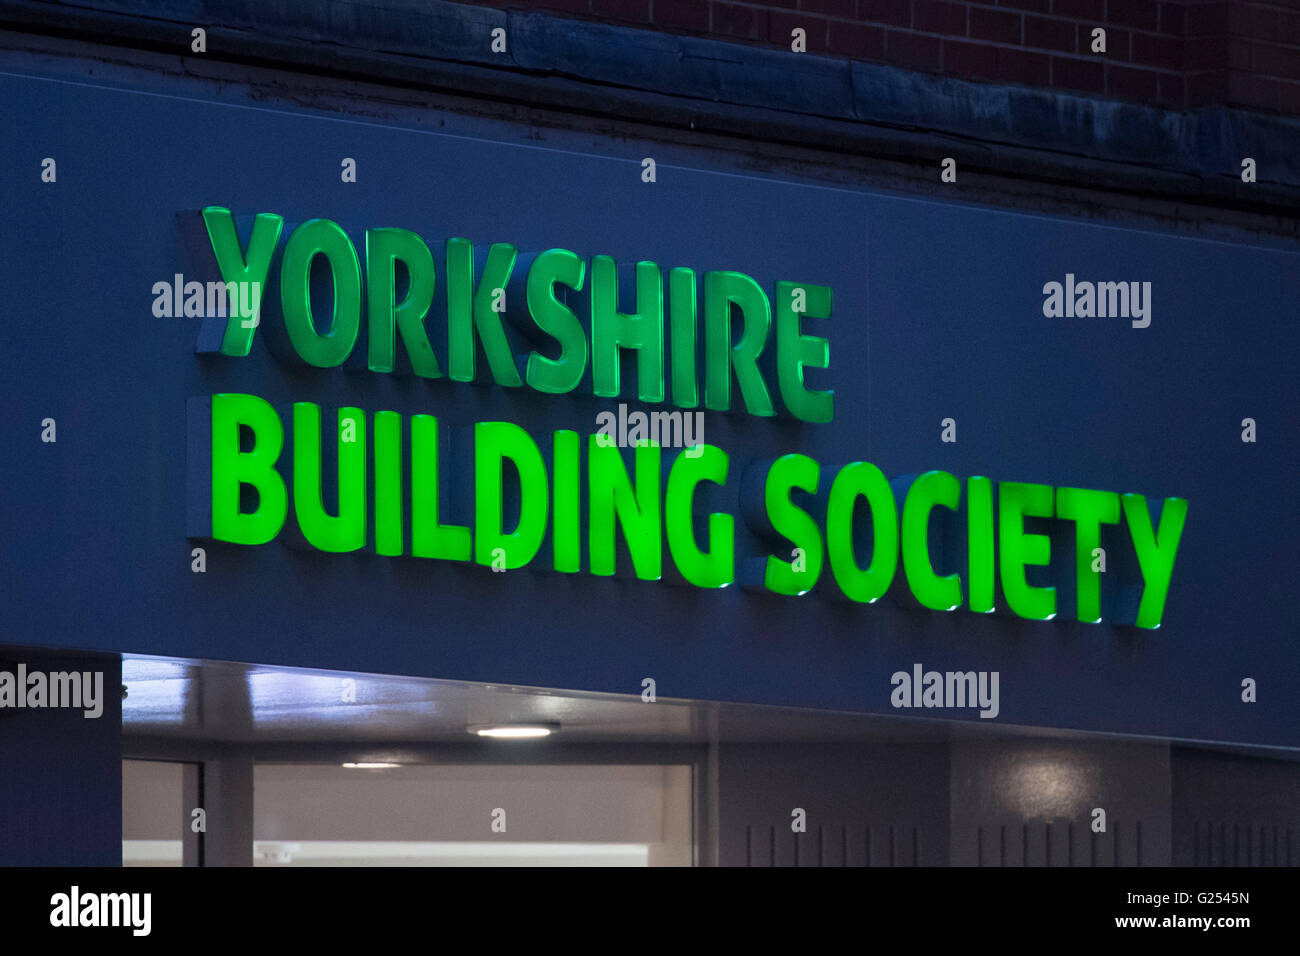 Yorkshire Building Society logo banco registrarse Foto de stock